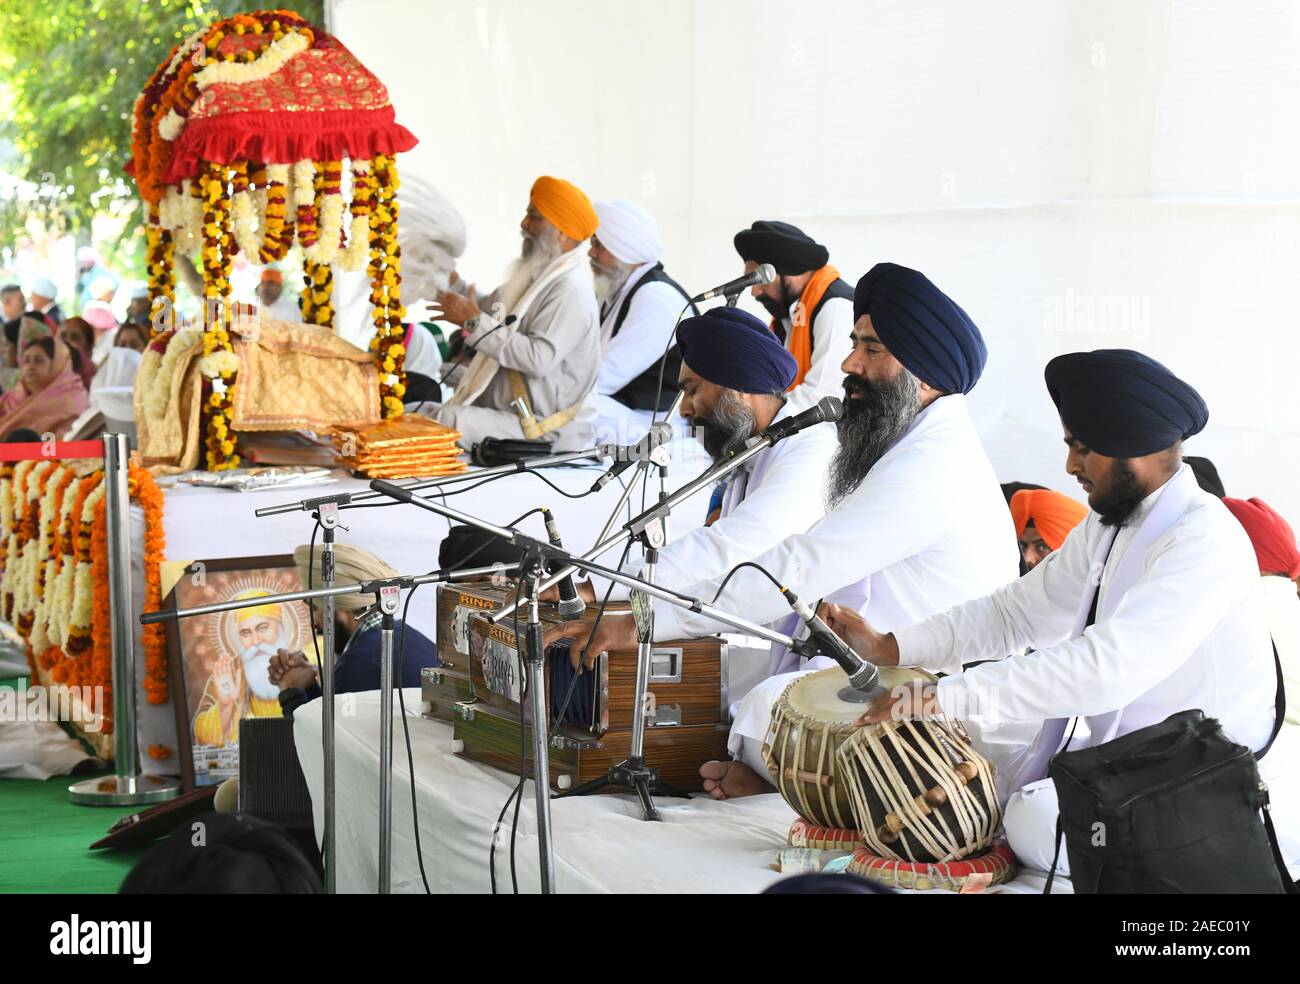 Punjabi Singer playing harmonium and singing during the Shabad Kirtan held on the occasion of 550th birth anniversary of Guru Nanak dev ji at Jaipur. Stock Photo